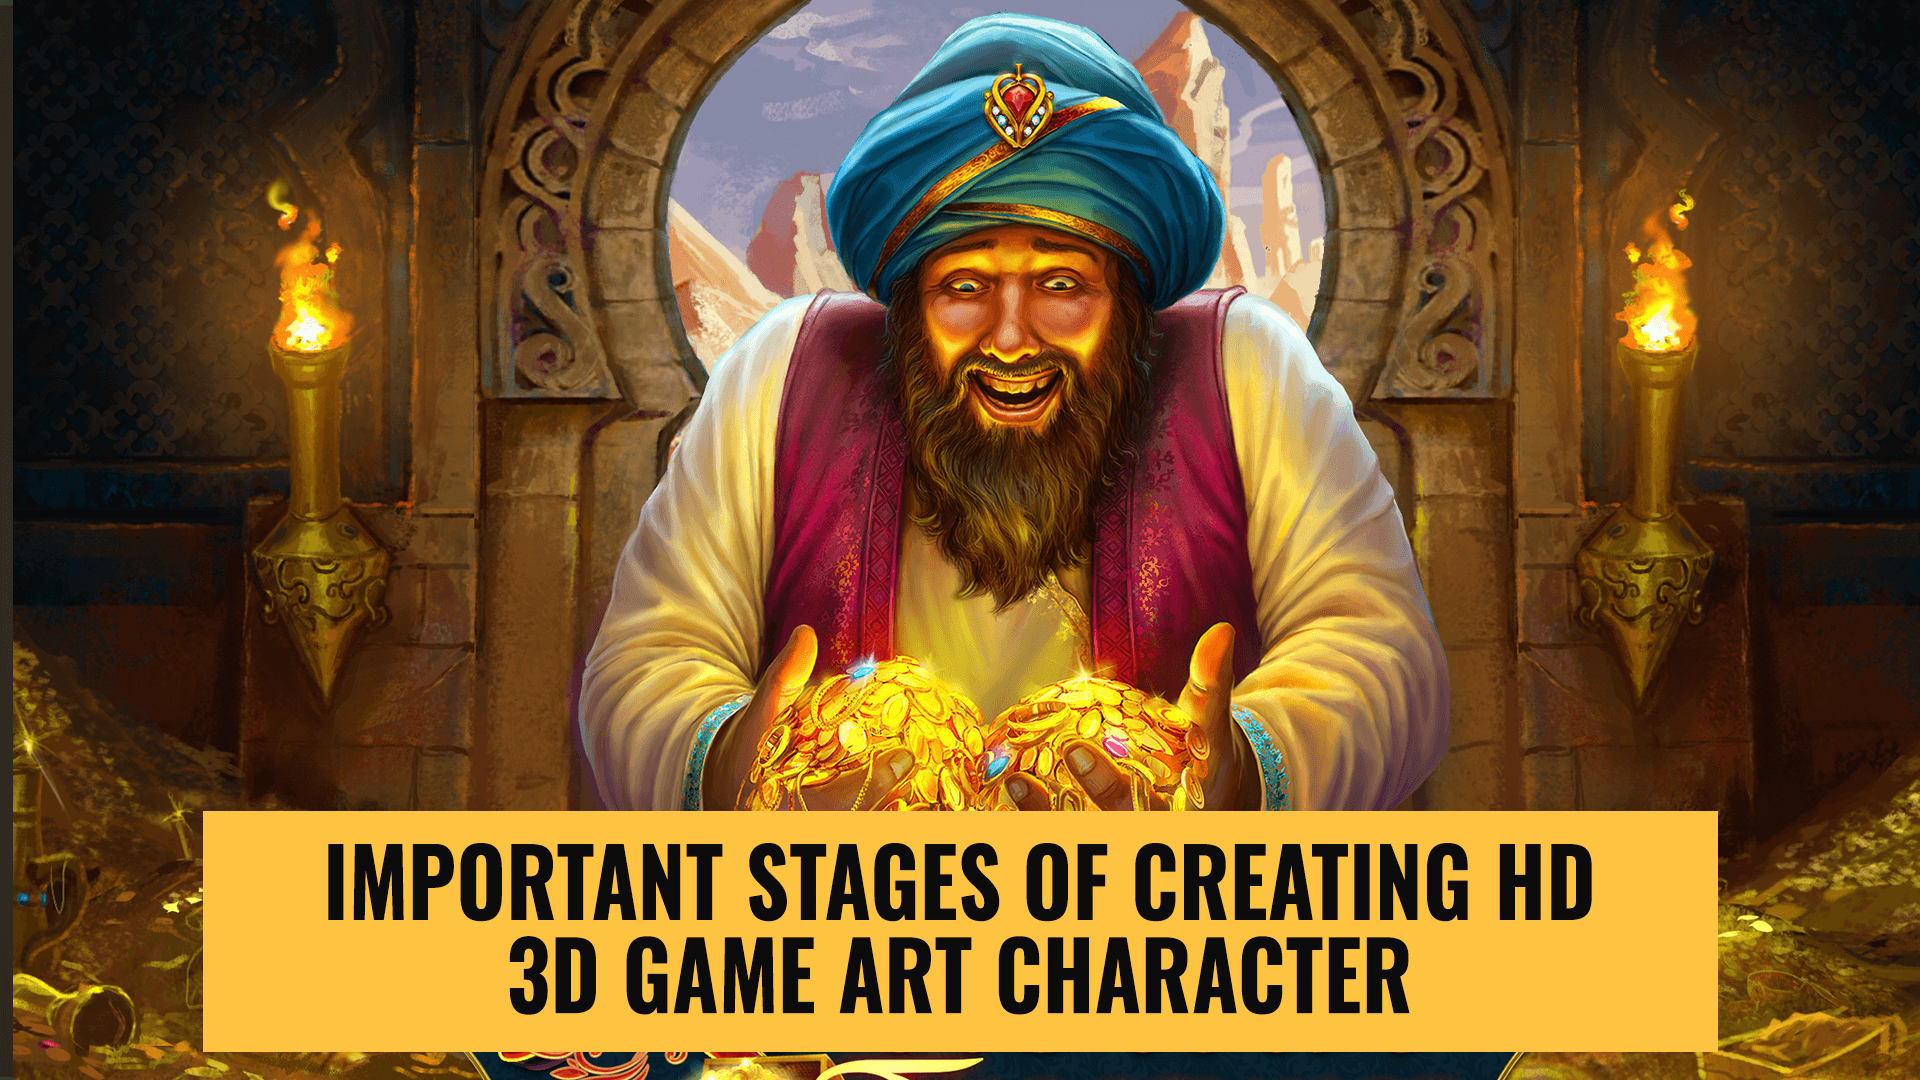 3D Game Art Character